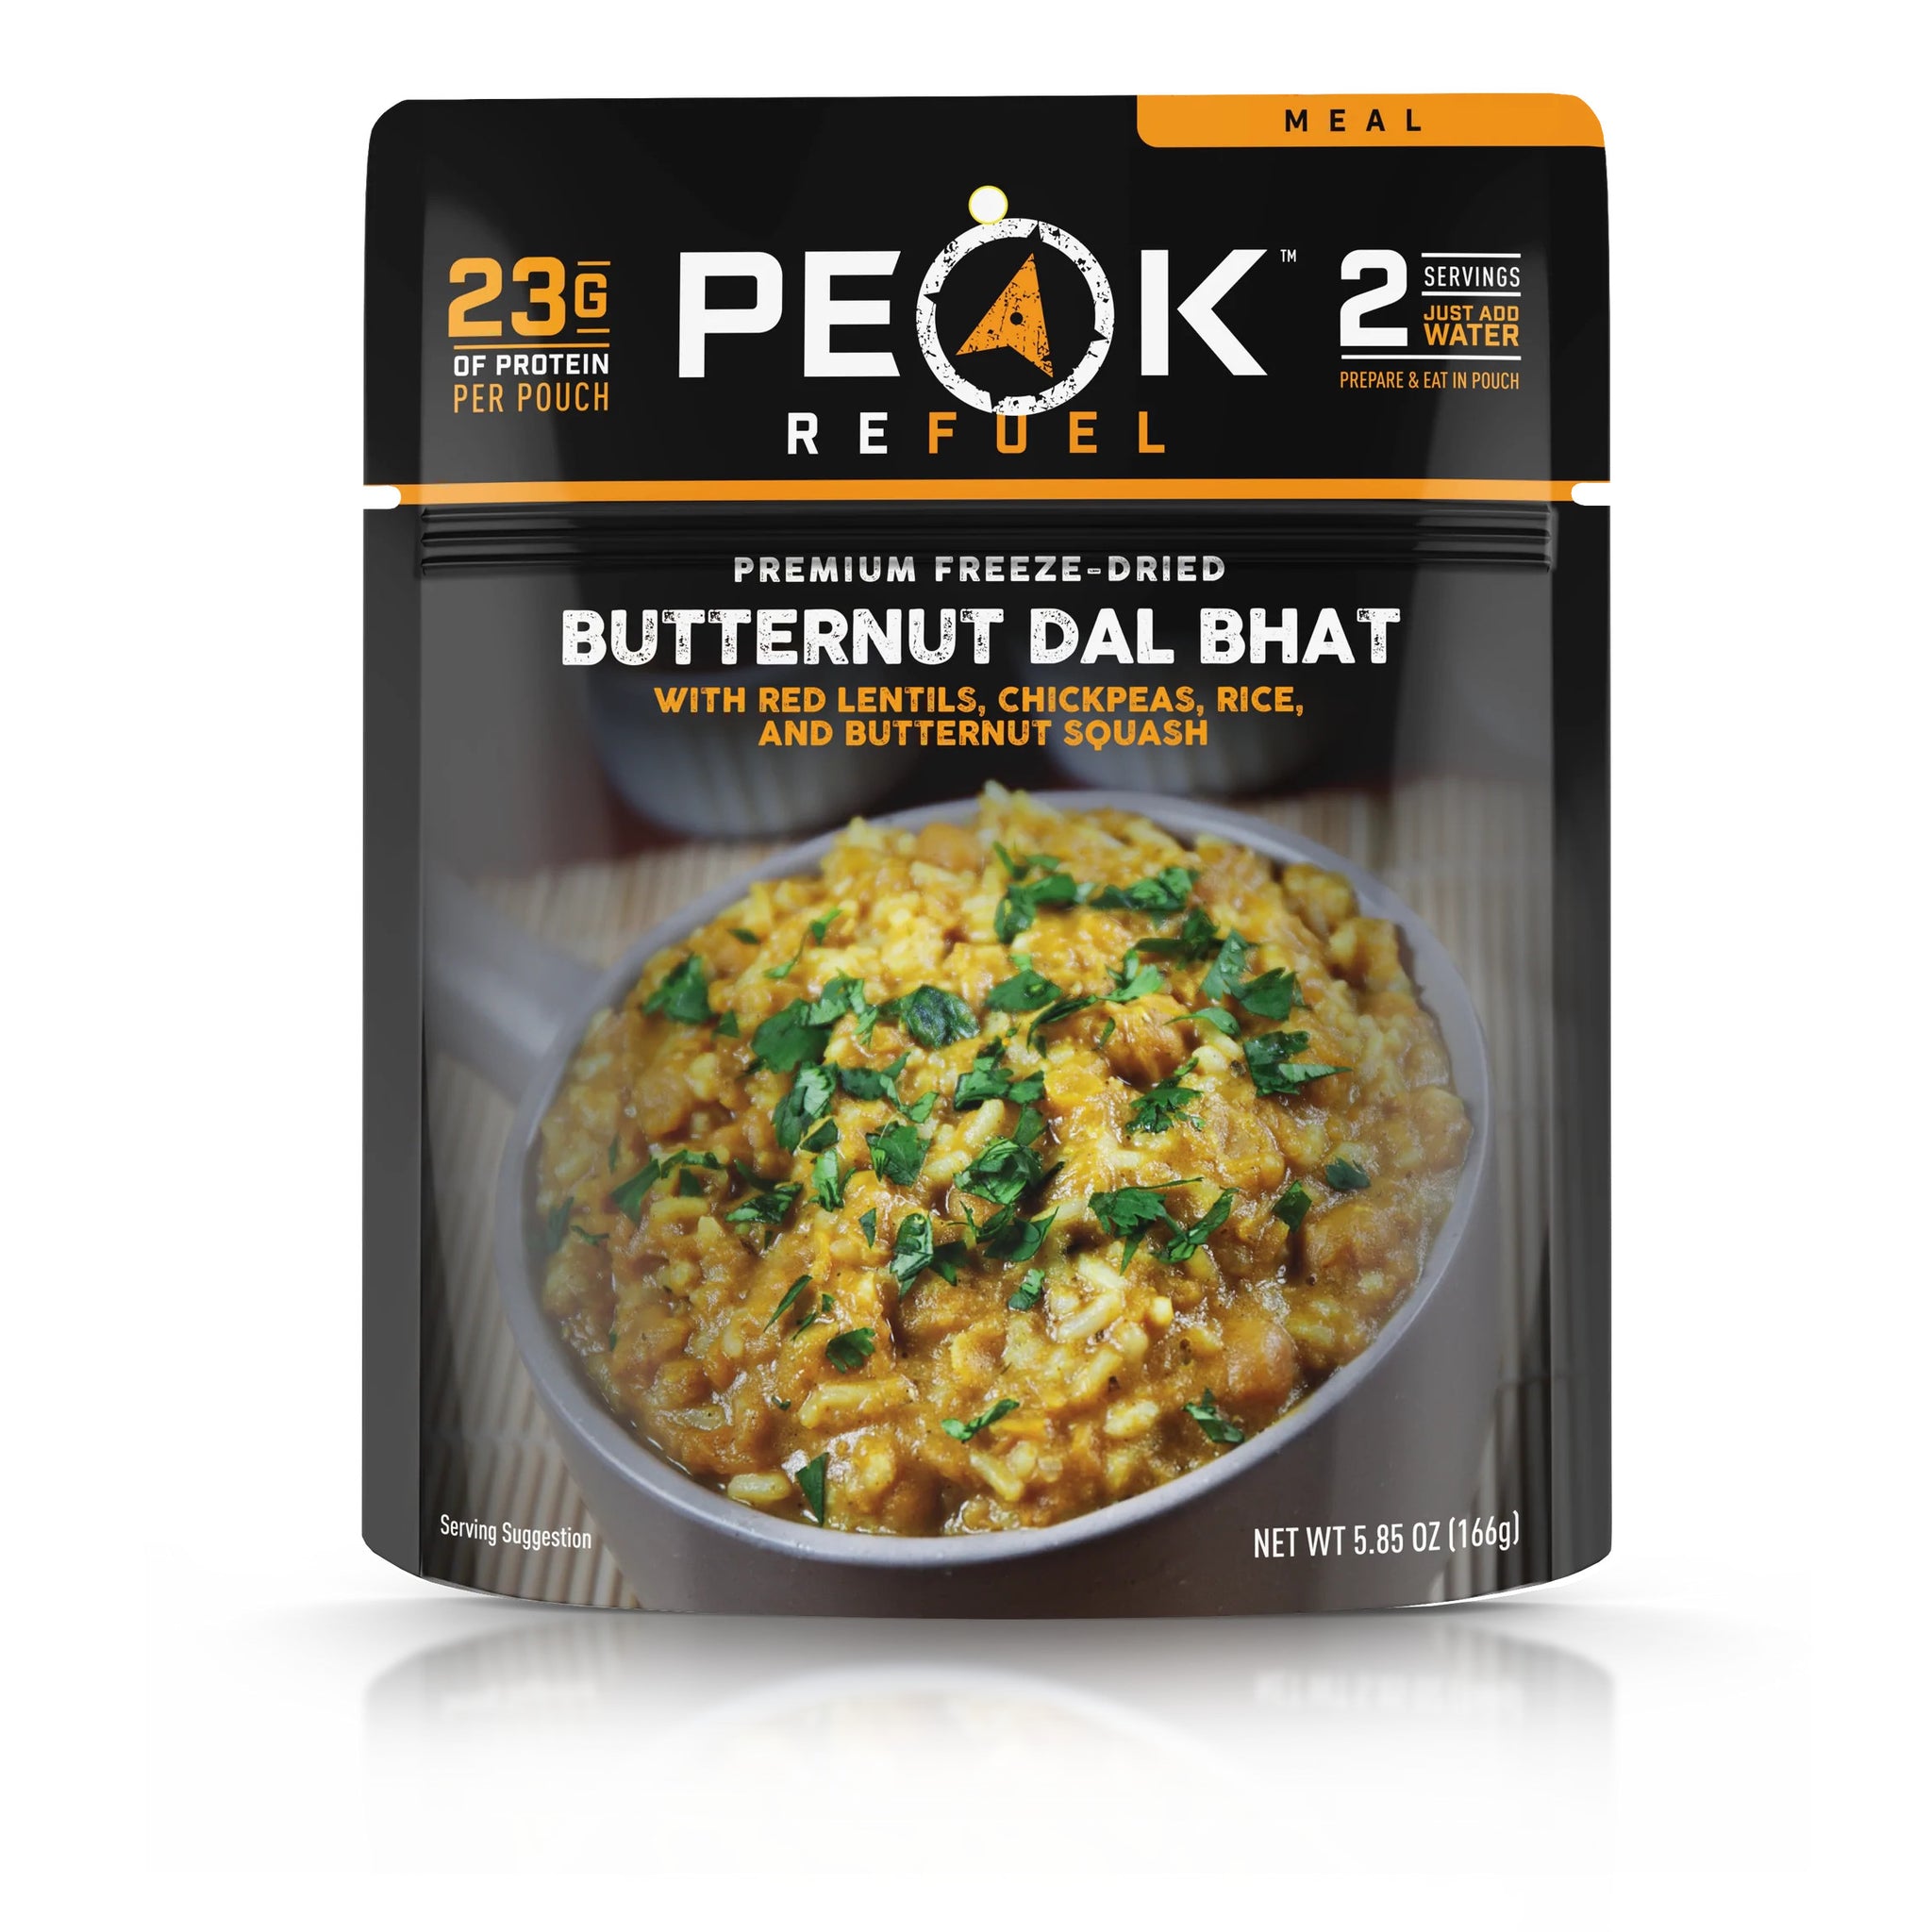 Peak Refuel Butternut Dal Bhat (v)